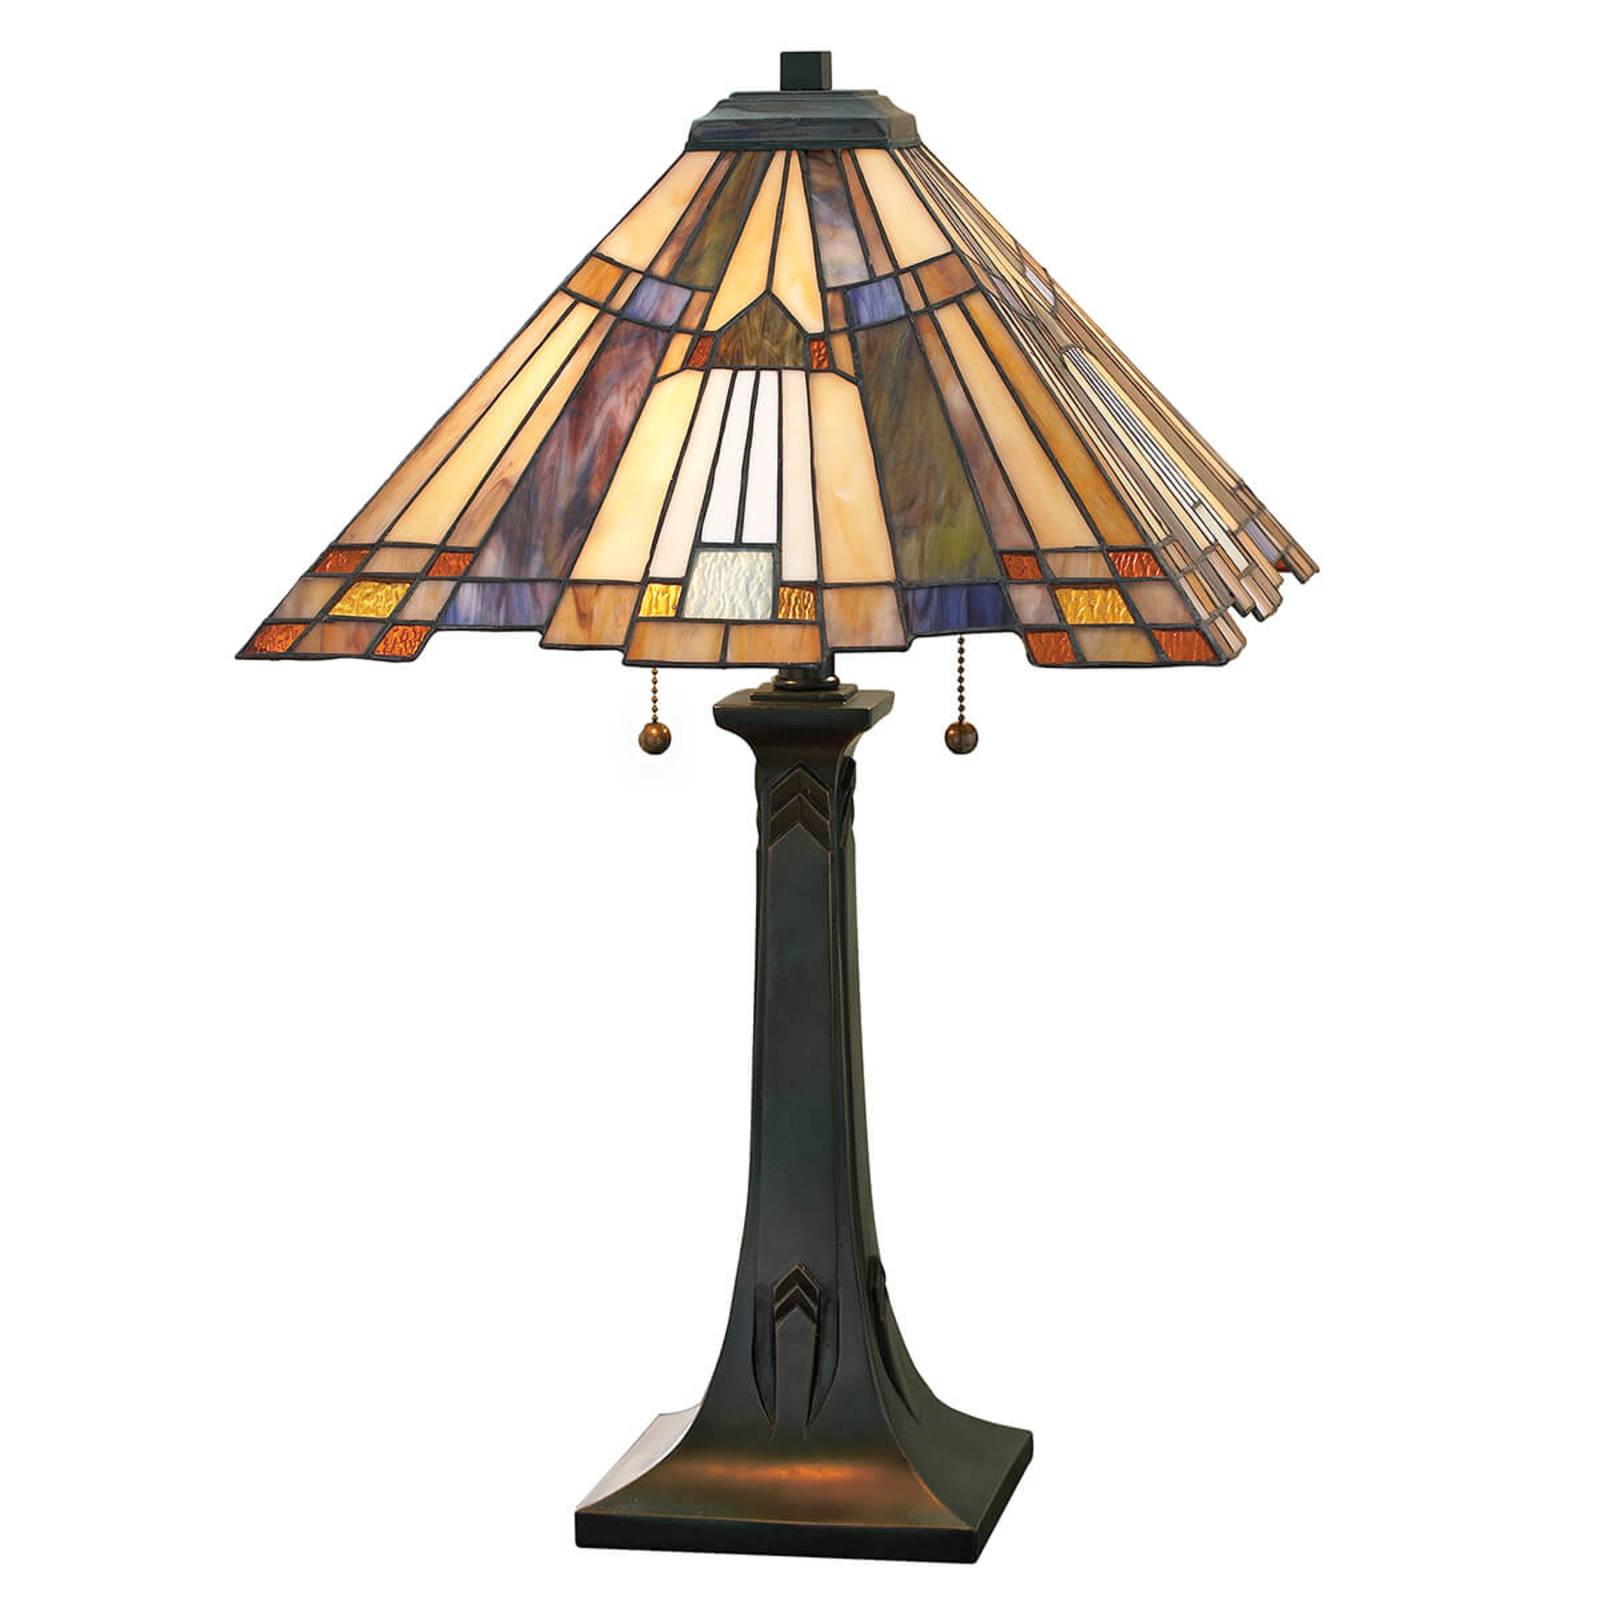 Image of QUOIZEL Jolie lampe à poser Inglenook style Tiffany 5024005214915